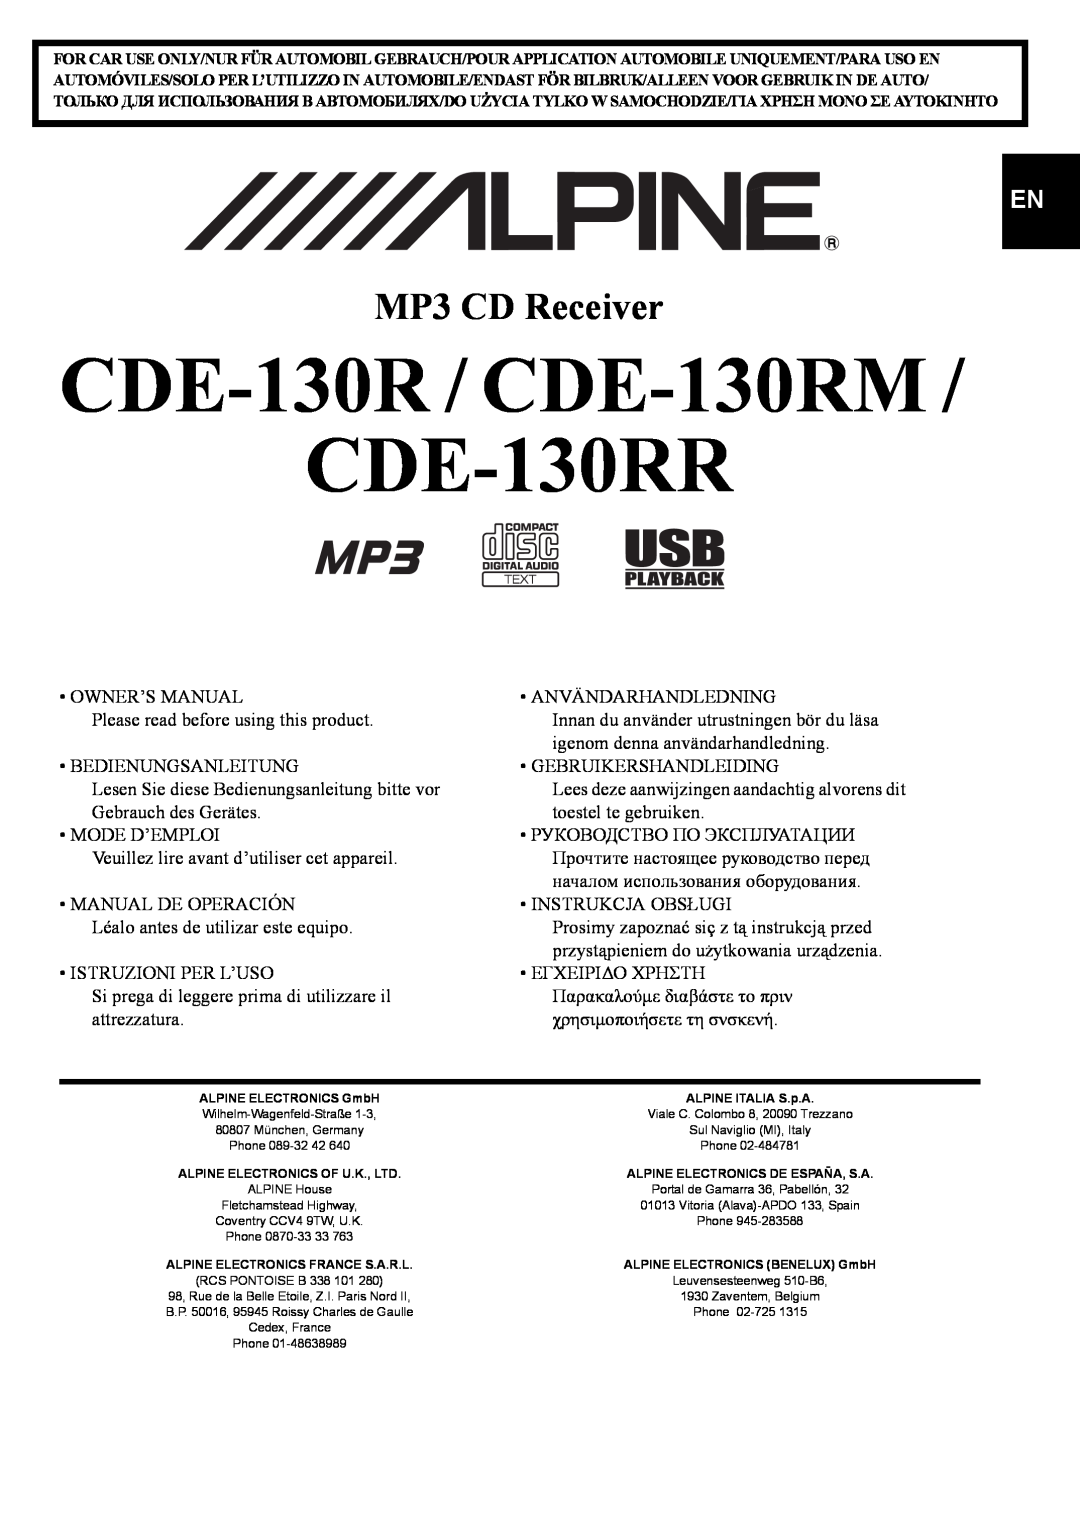 Alpine owner manual CDE-130R / CDE-130RM CDE-130RR, MP3 CD Receiver 